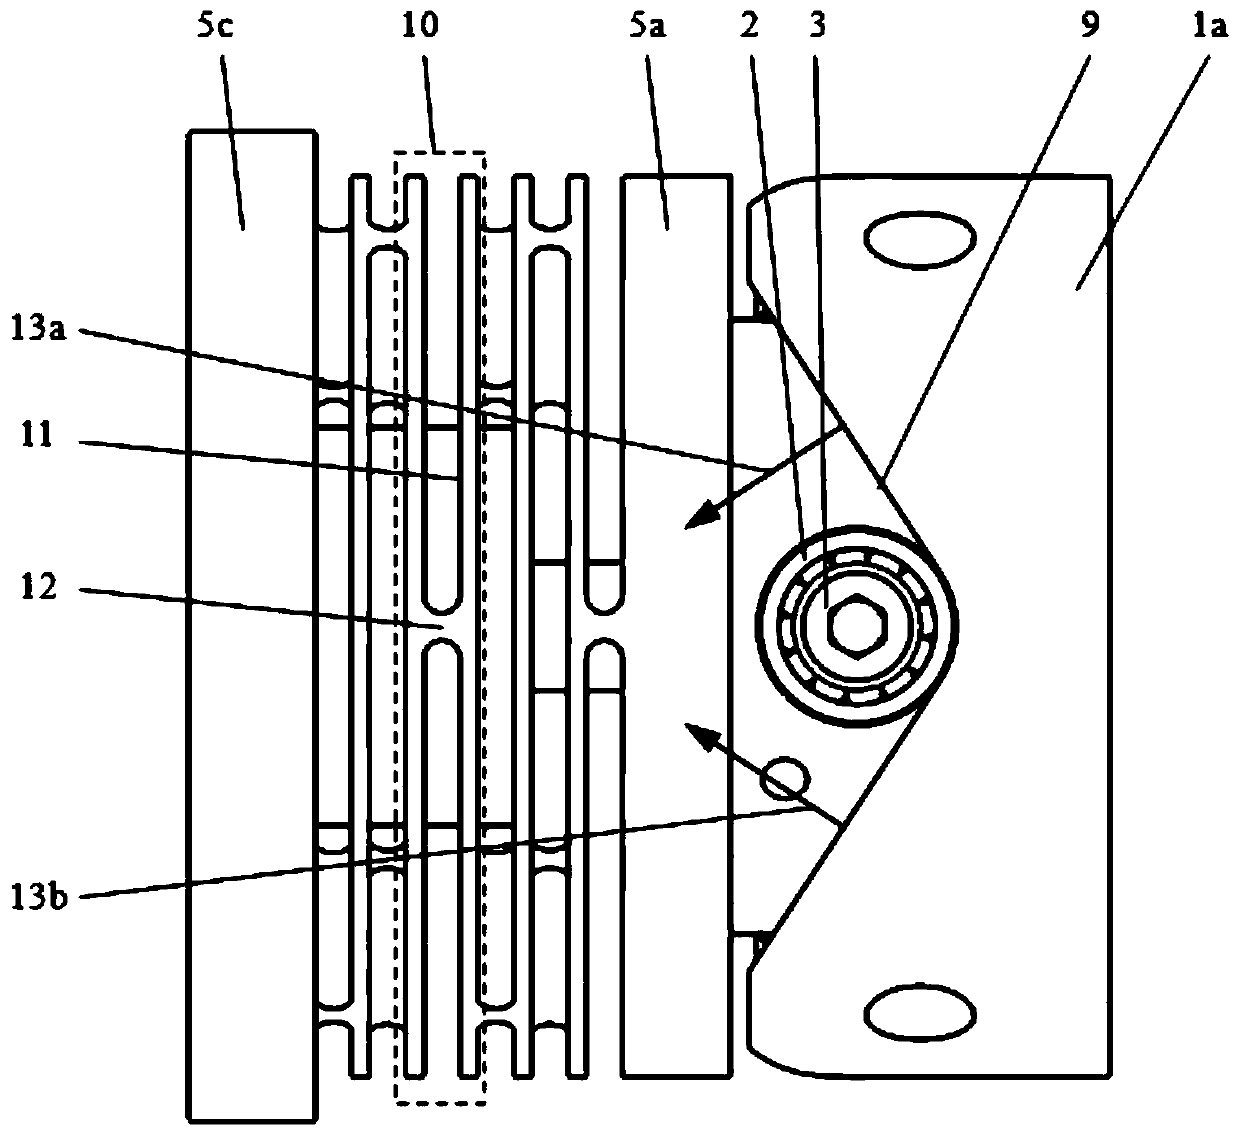 Serial elastic transmission device based on integral flexible hinge spring